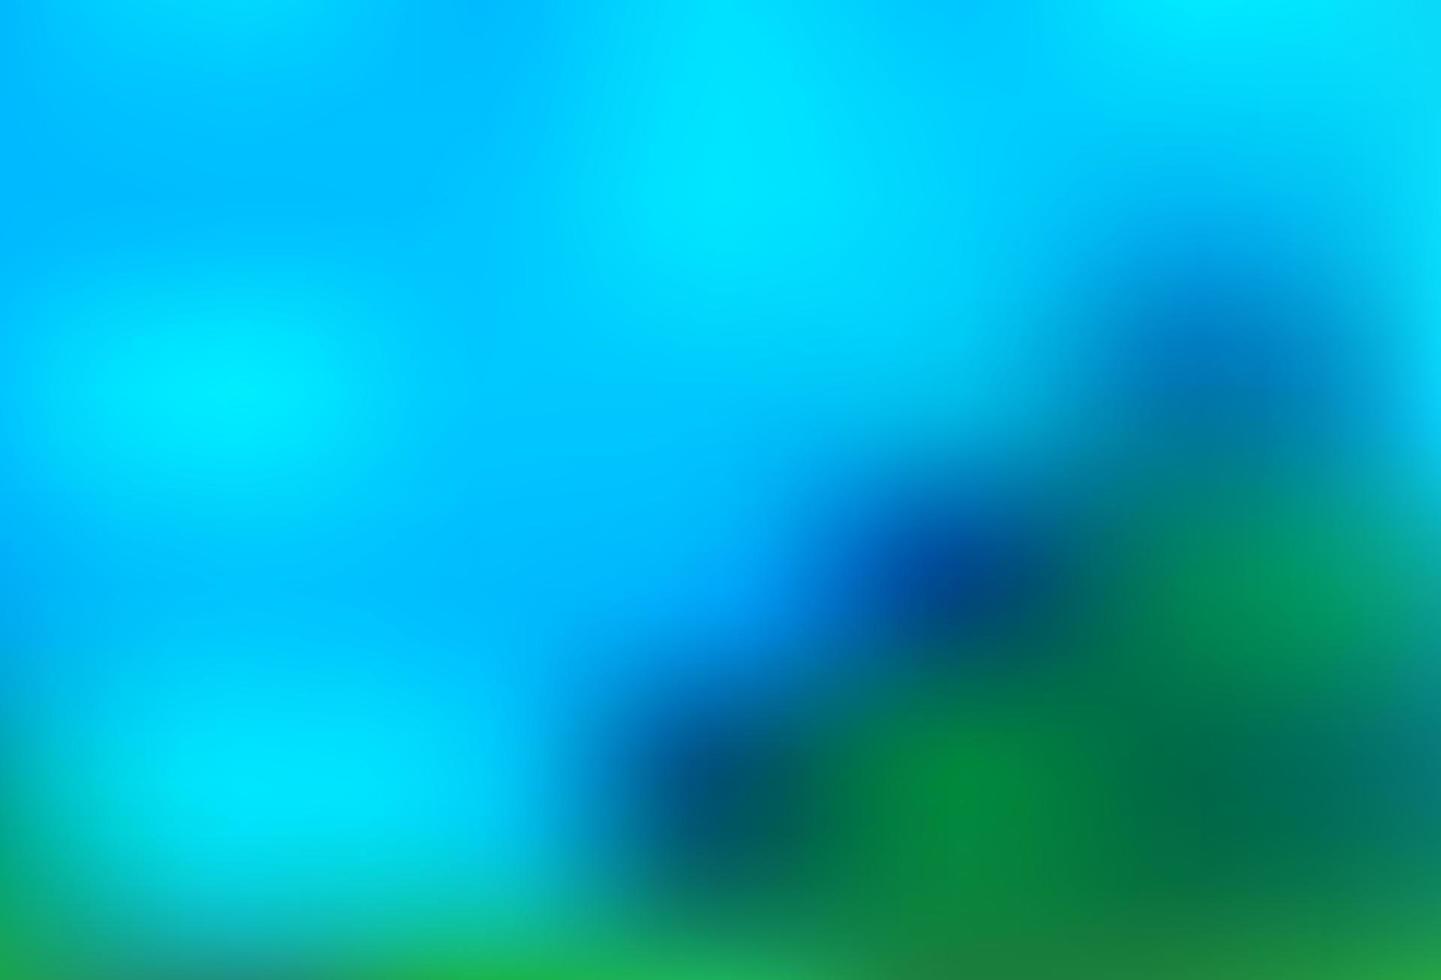 hellblauer, grüner Vektor abstrakter heller Hintergrund.